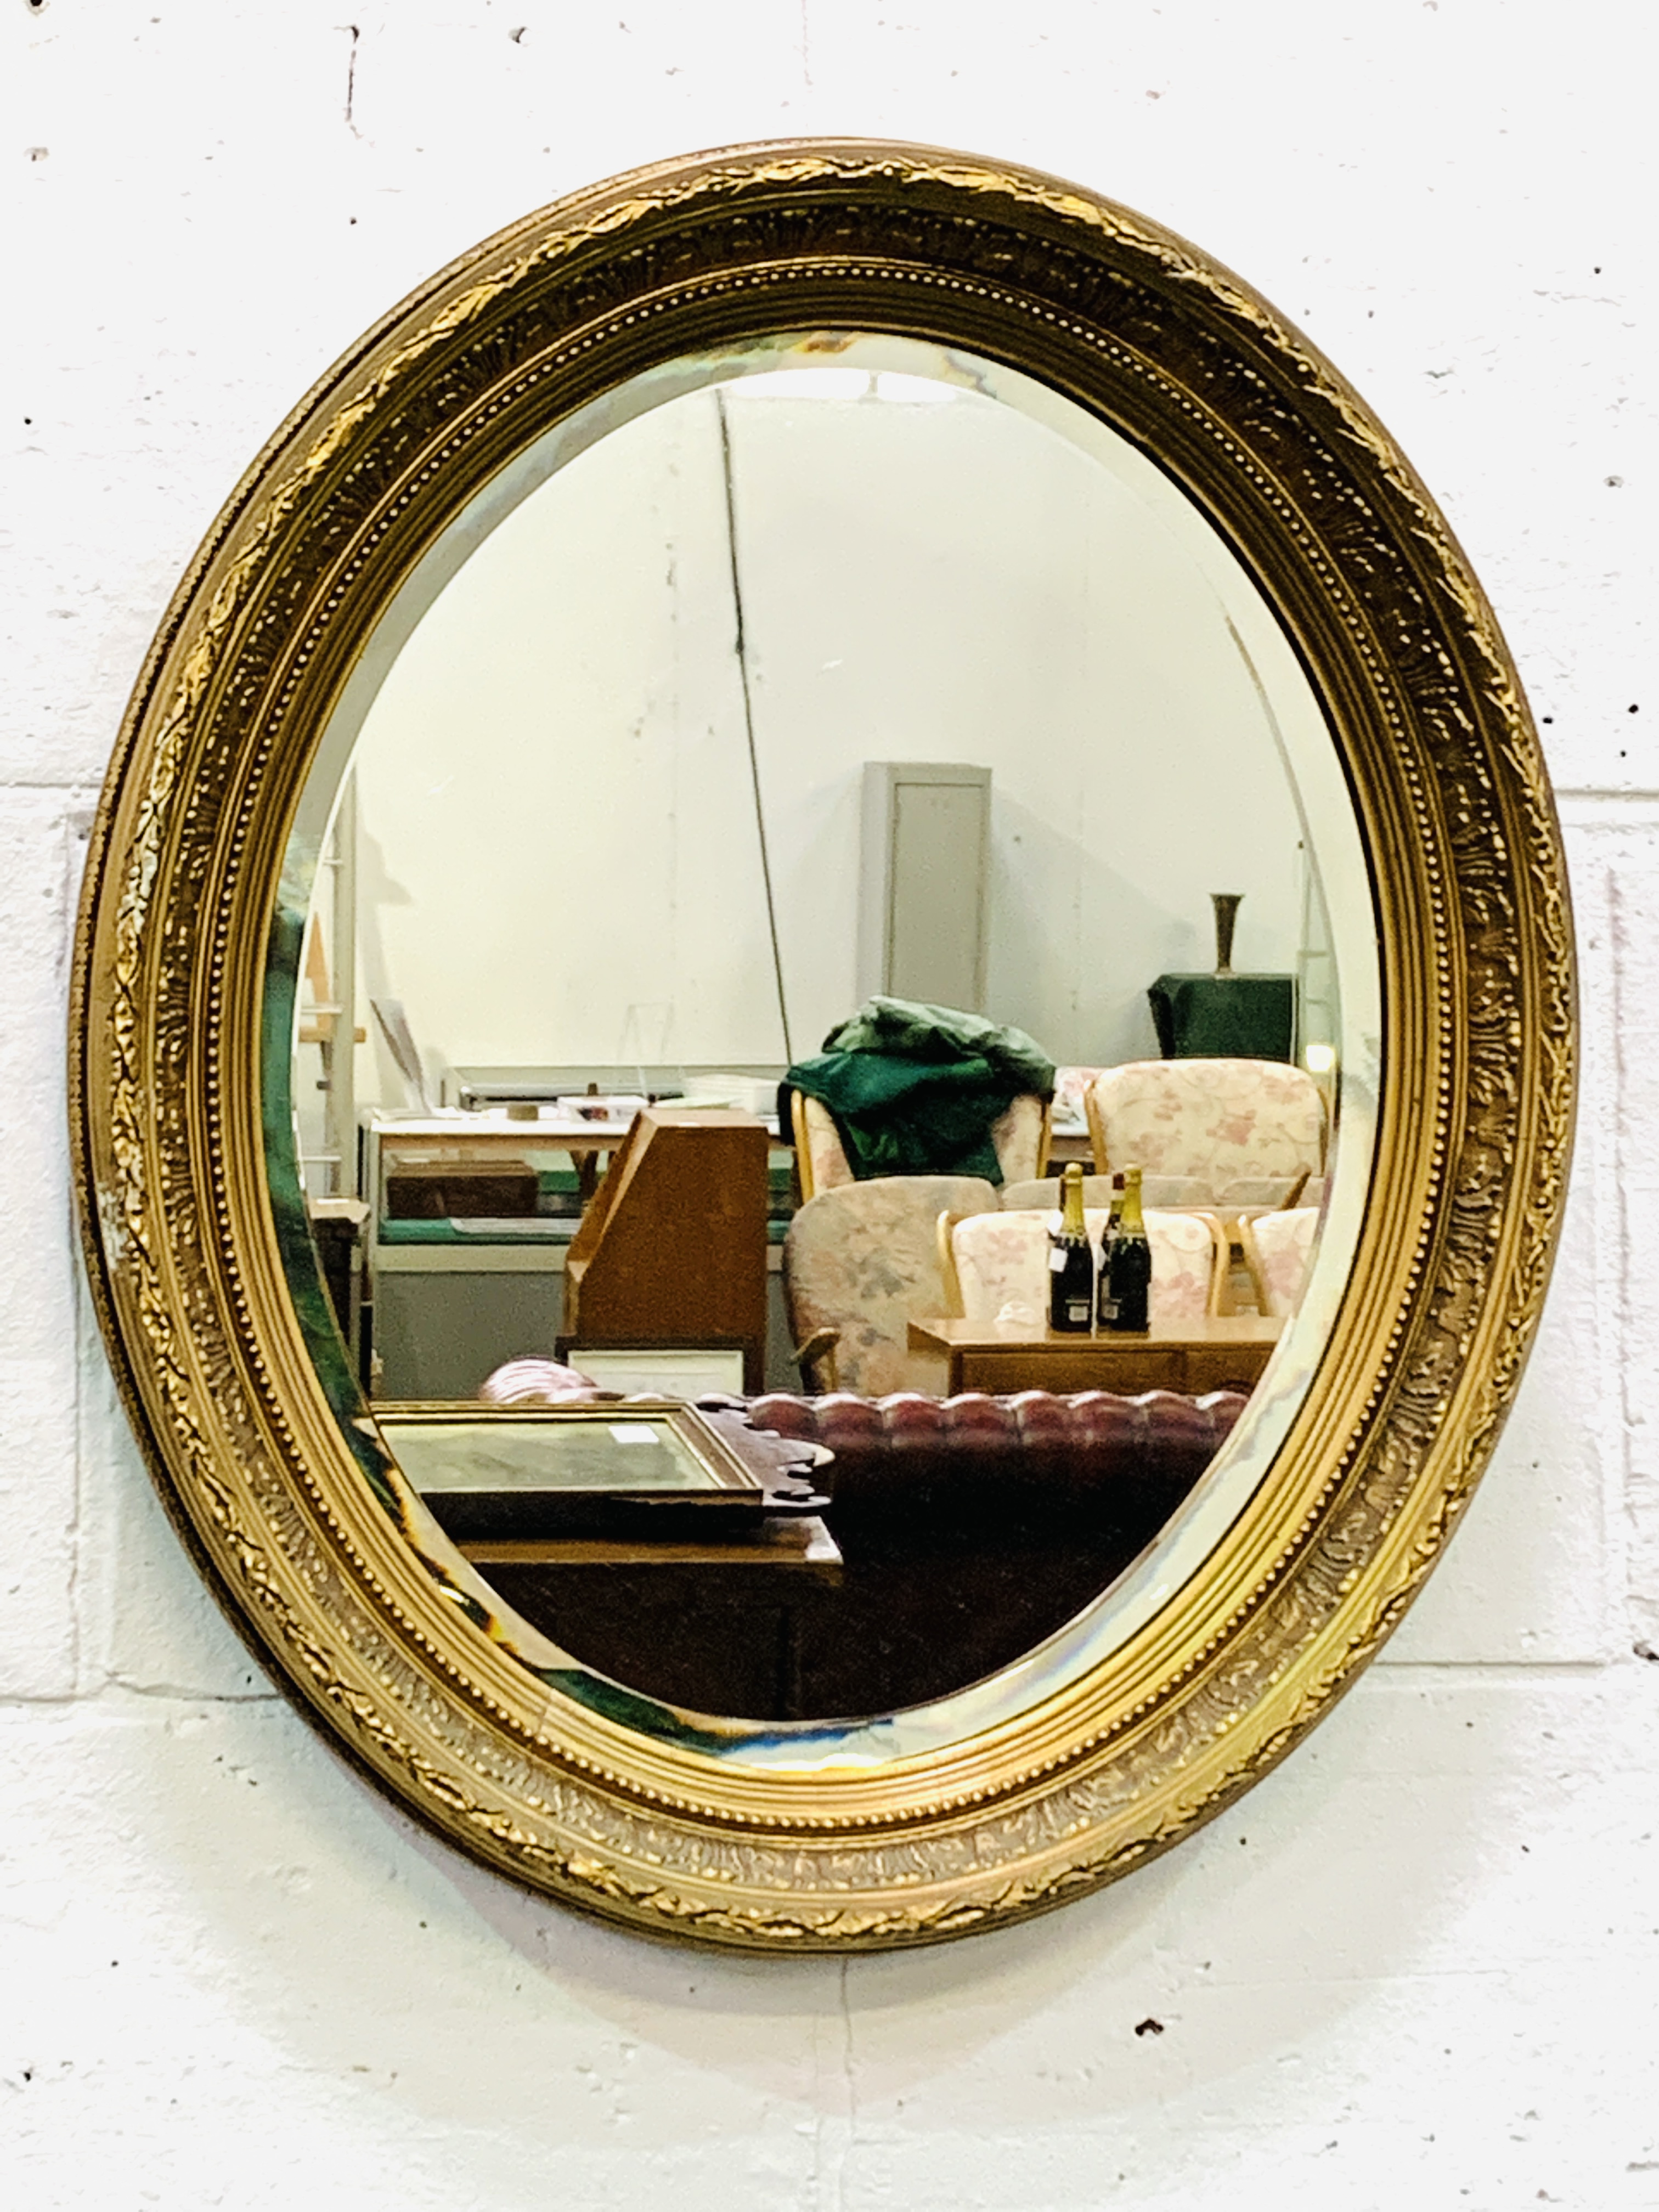 Oval gilt decorative edge wall mirror